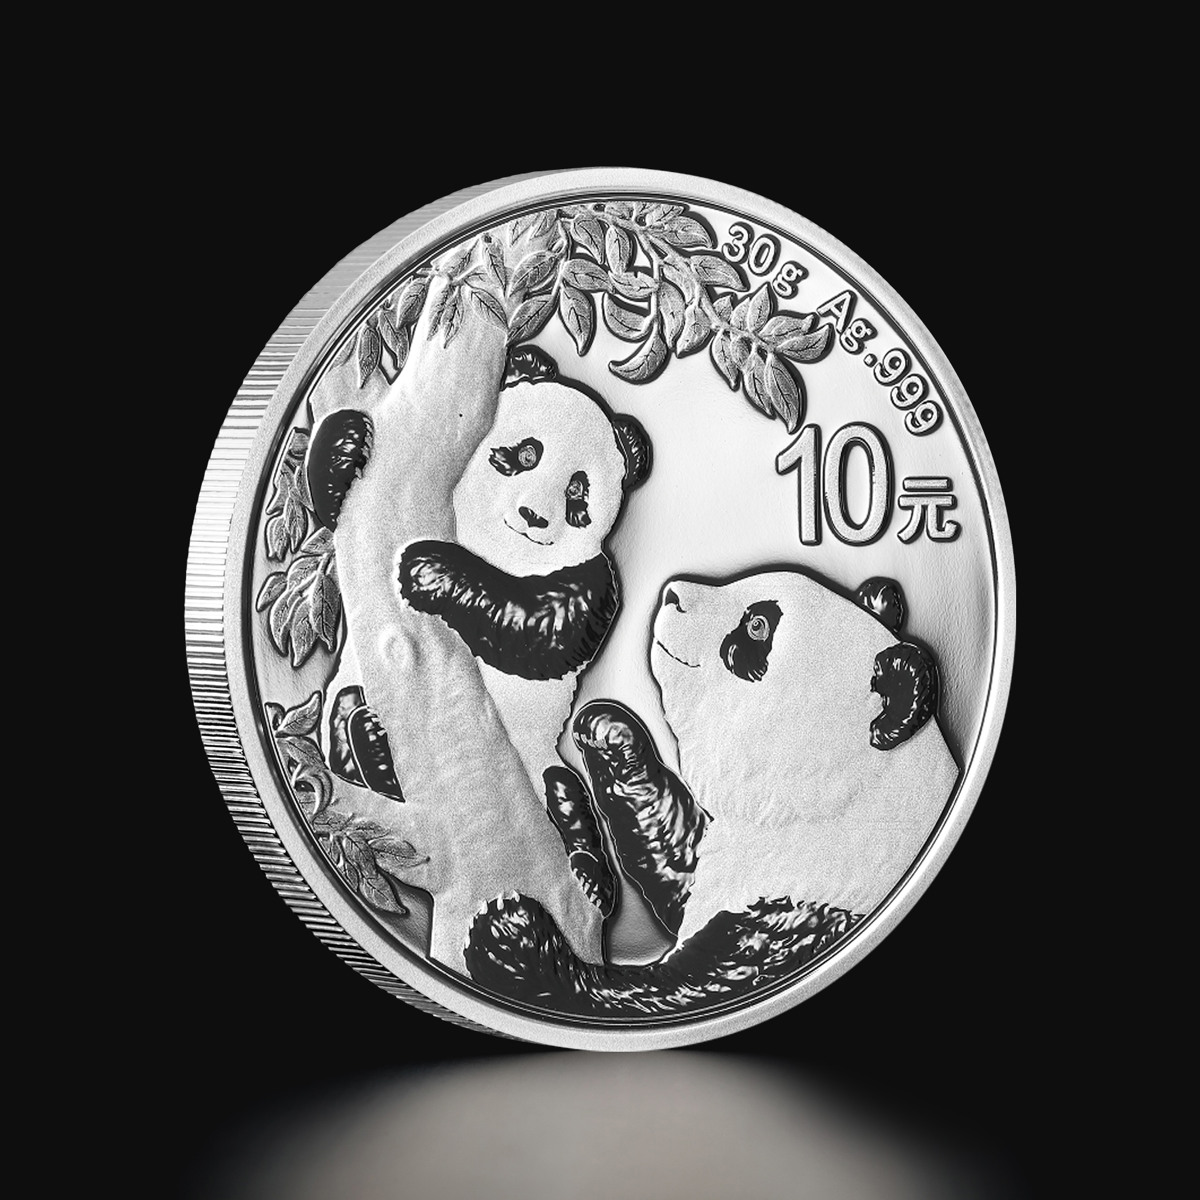 30 g Chinese Panda 2021 silver coin Tavex